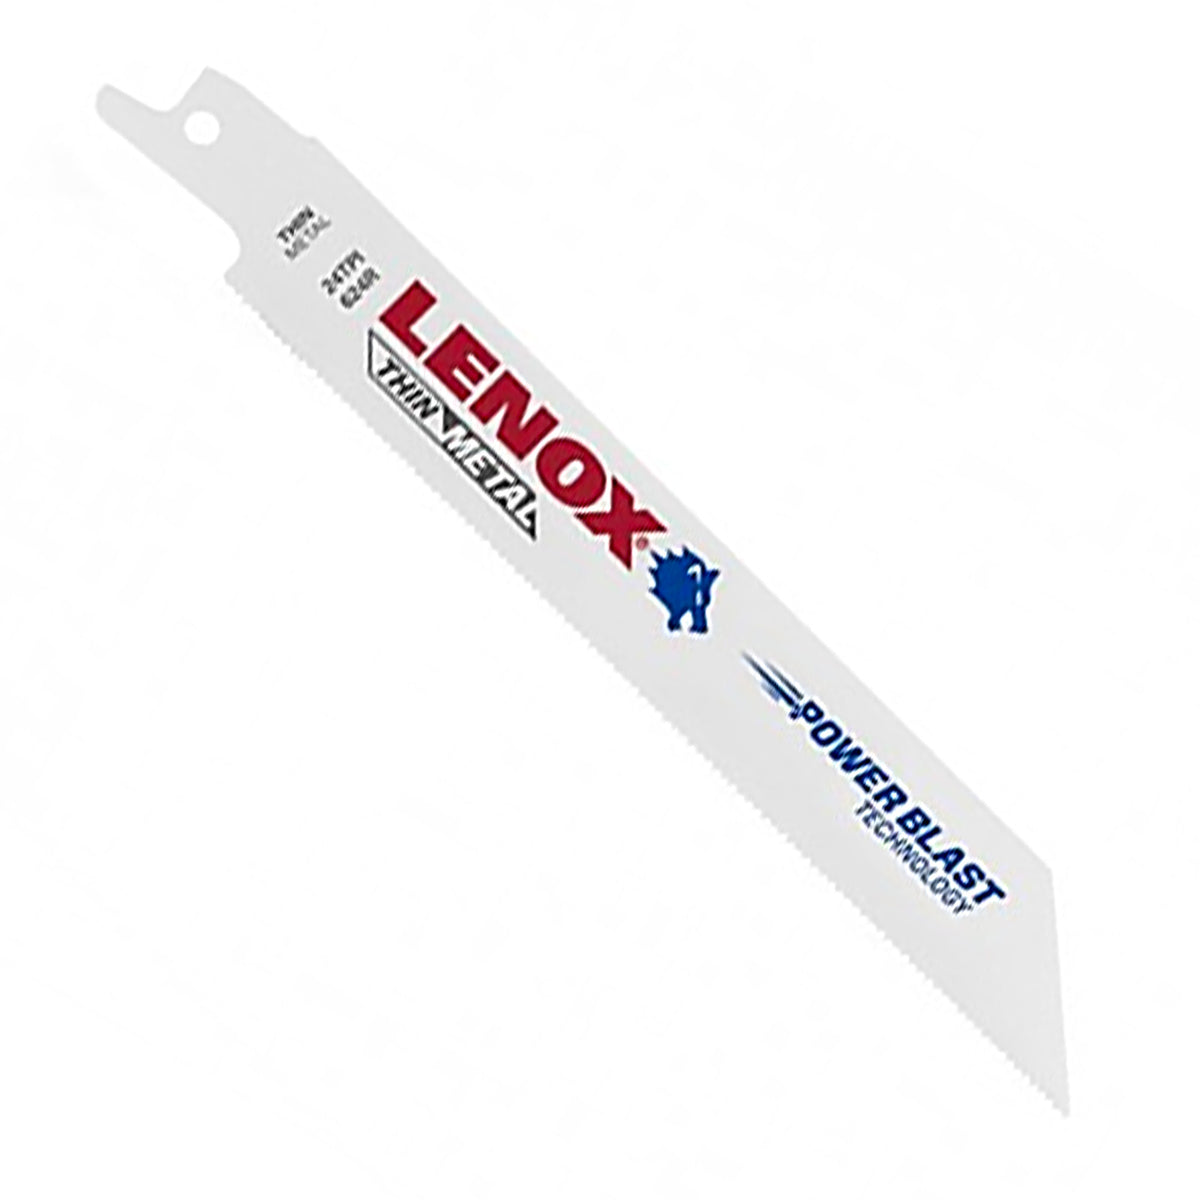 Lenox Metal Cutting Reciprocating Saw Blade - 624R - 6", 24 TPI